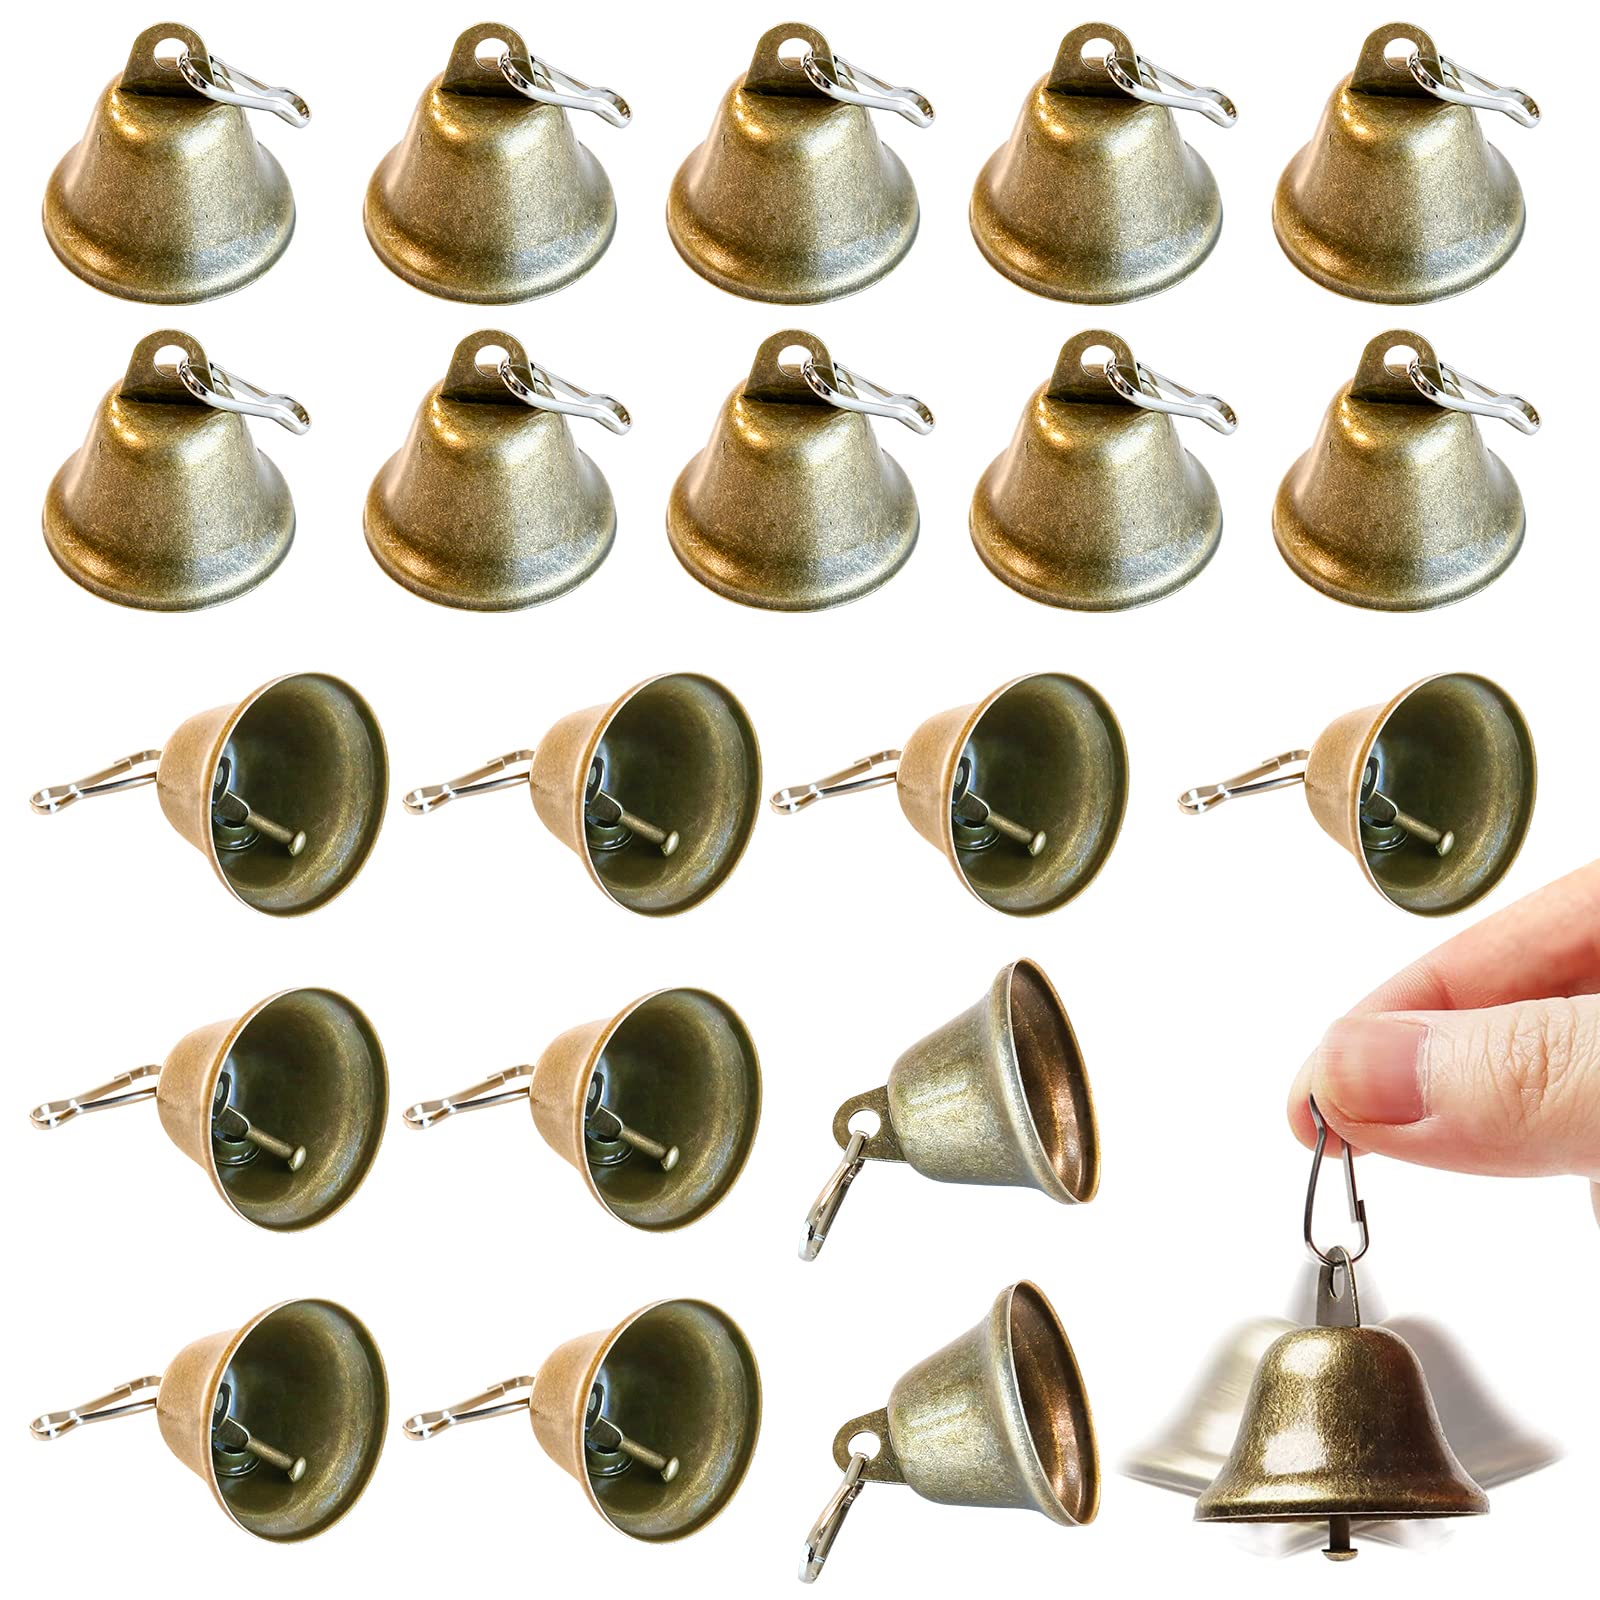 Craft Bells,20PCS Jingle Bells Brass Bells for Crafts with Spring Hooks  Hanging Bells for Dog Potty Training Doorbell Wedding Decor Christmas DIY  Favor,1.65 x 1.5 Inch Bronze